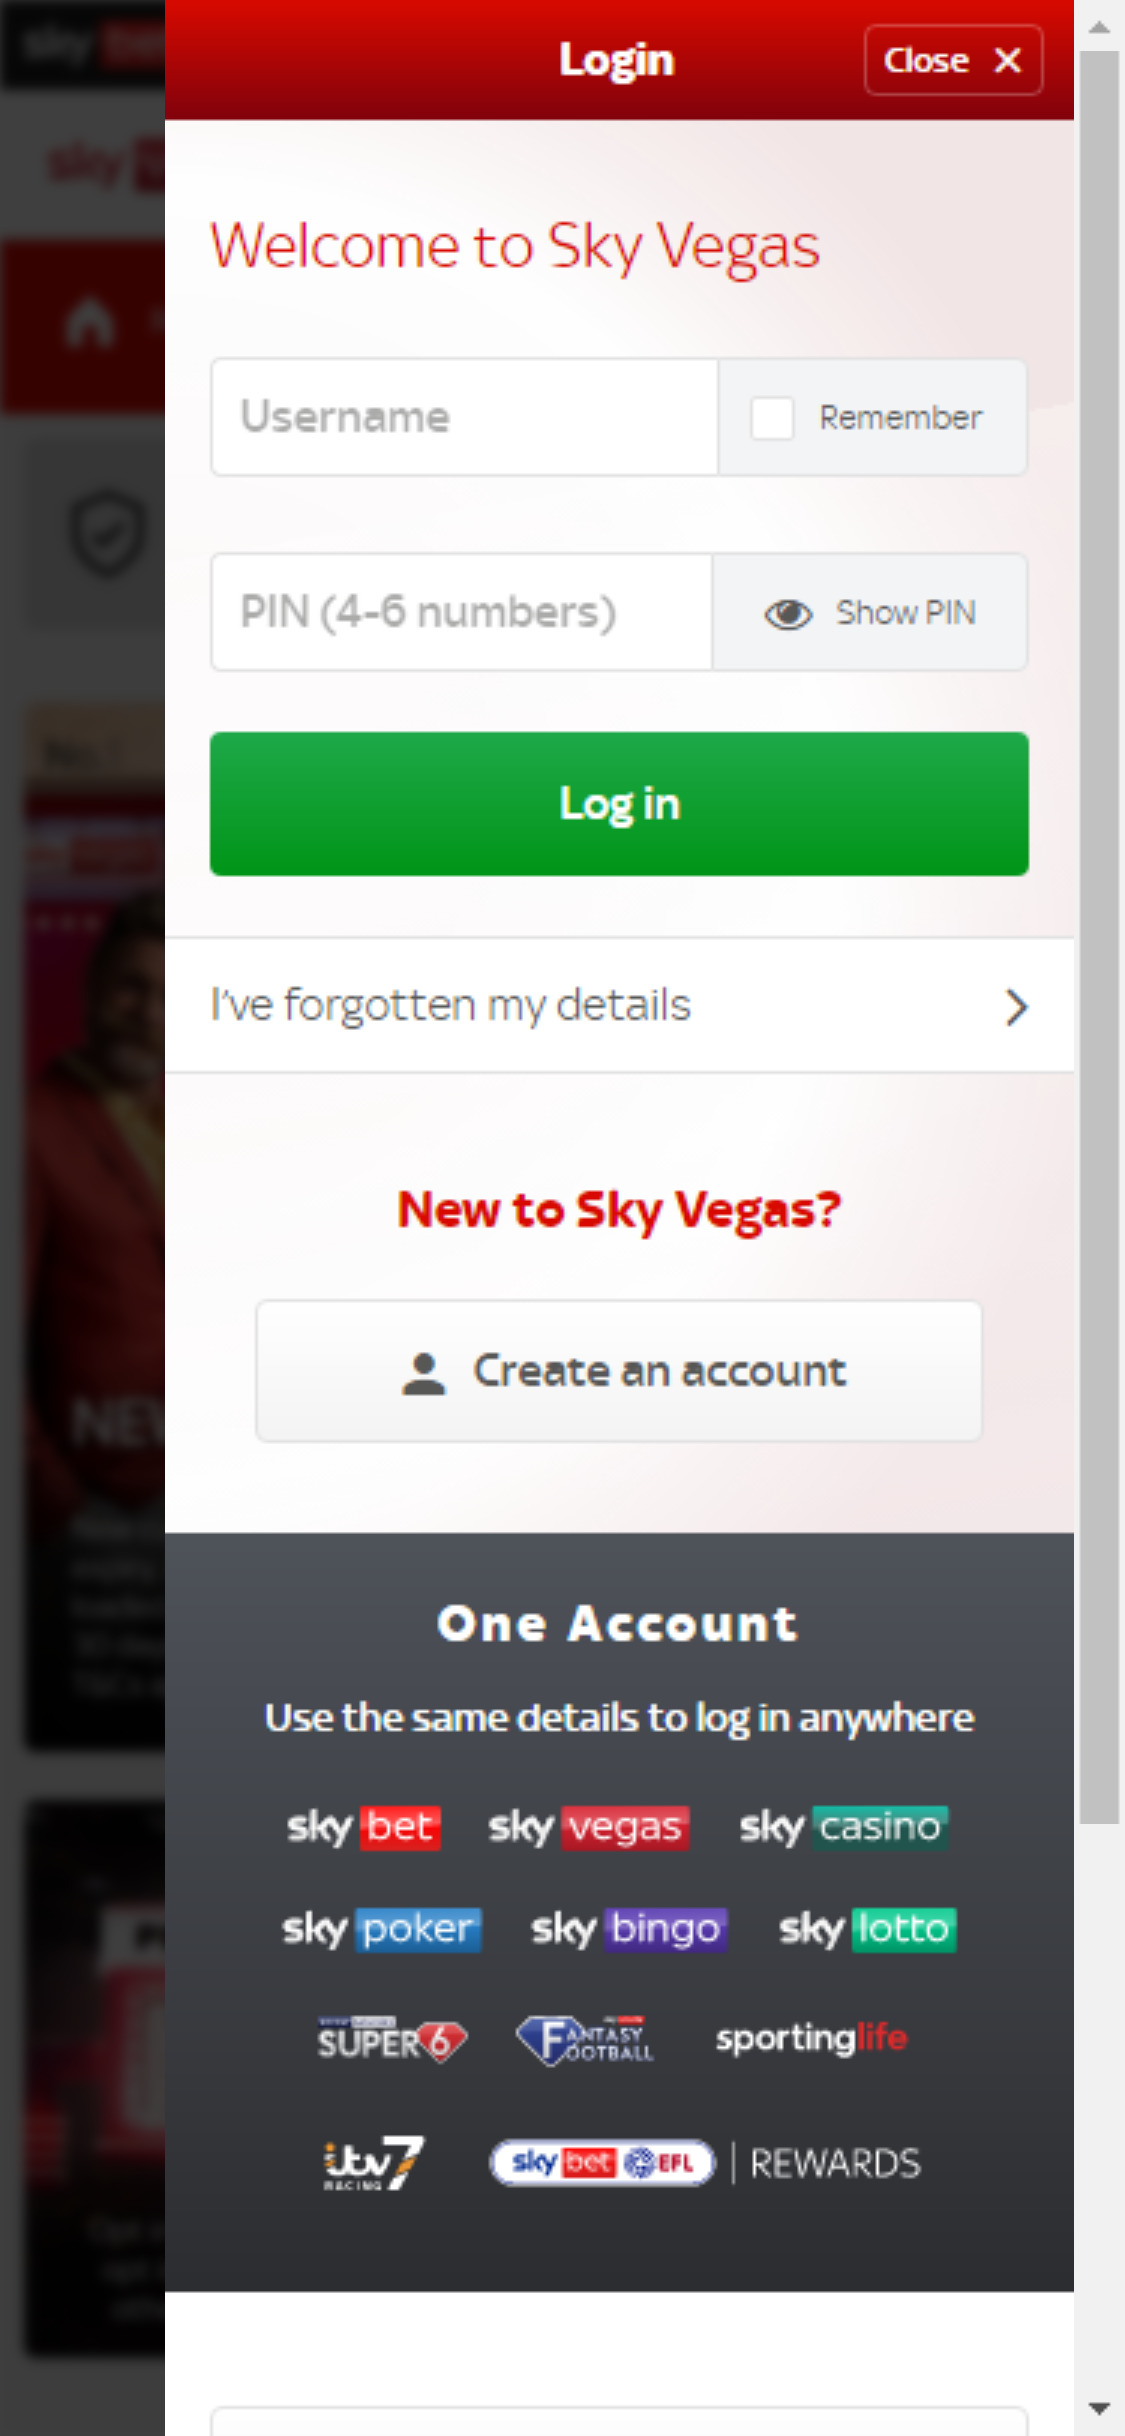 Sky Vegas Casino Mobile Login Review